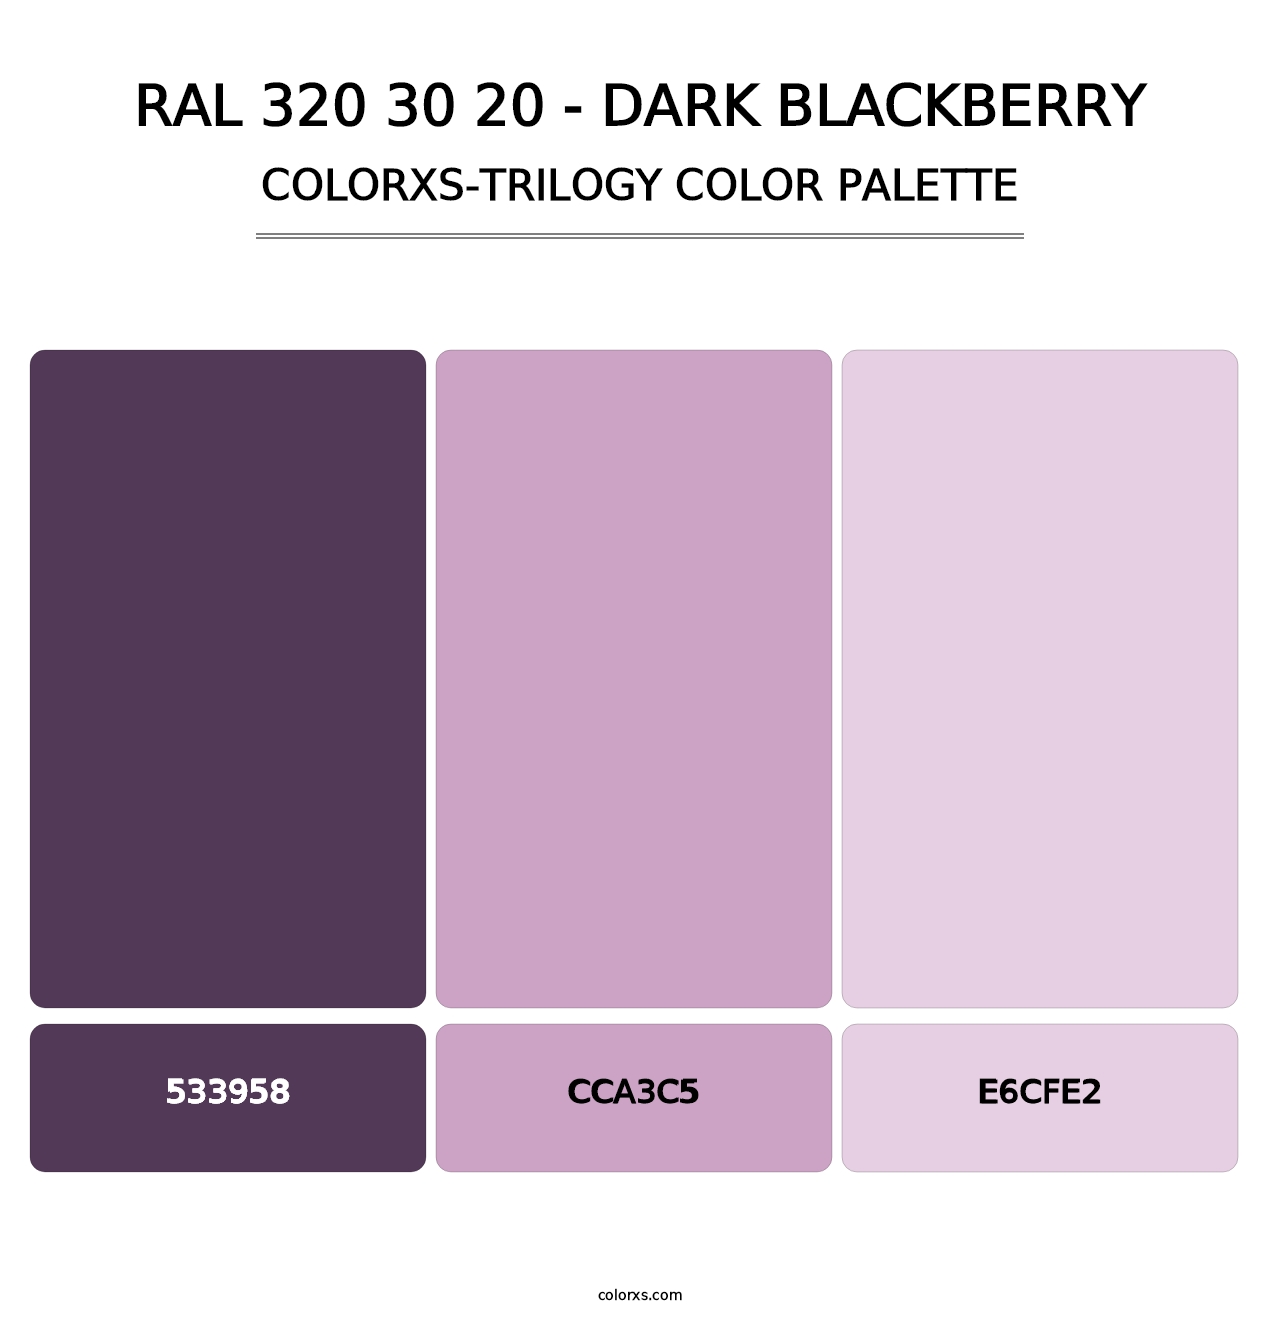 RAL 320 30 20 - Dark Blackberry - Colorxs Trilogy Palette